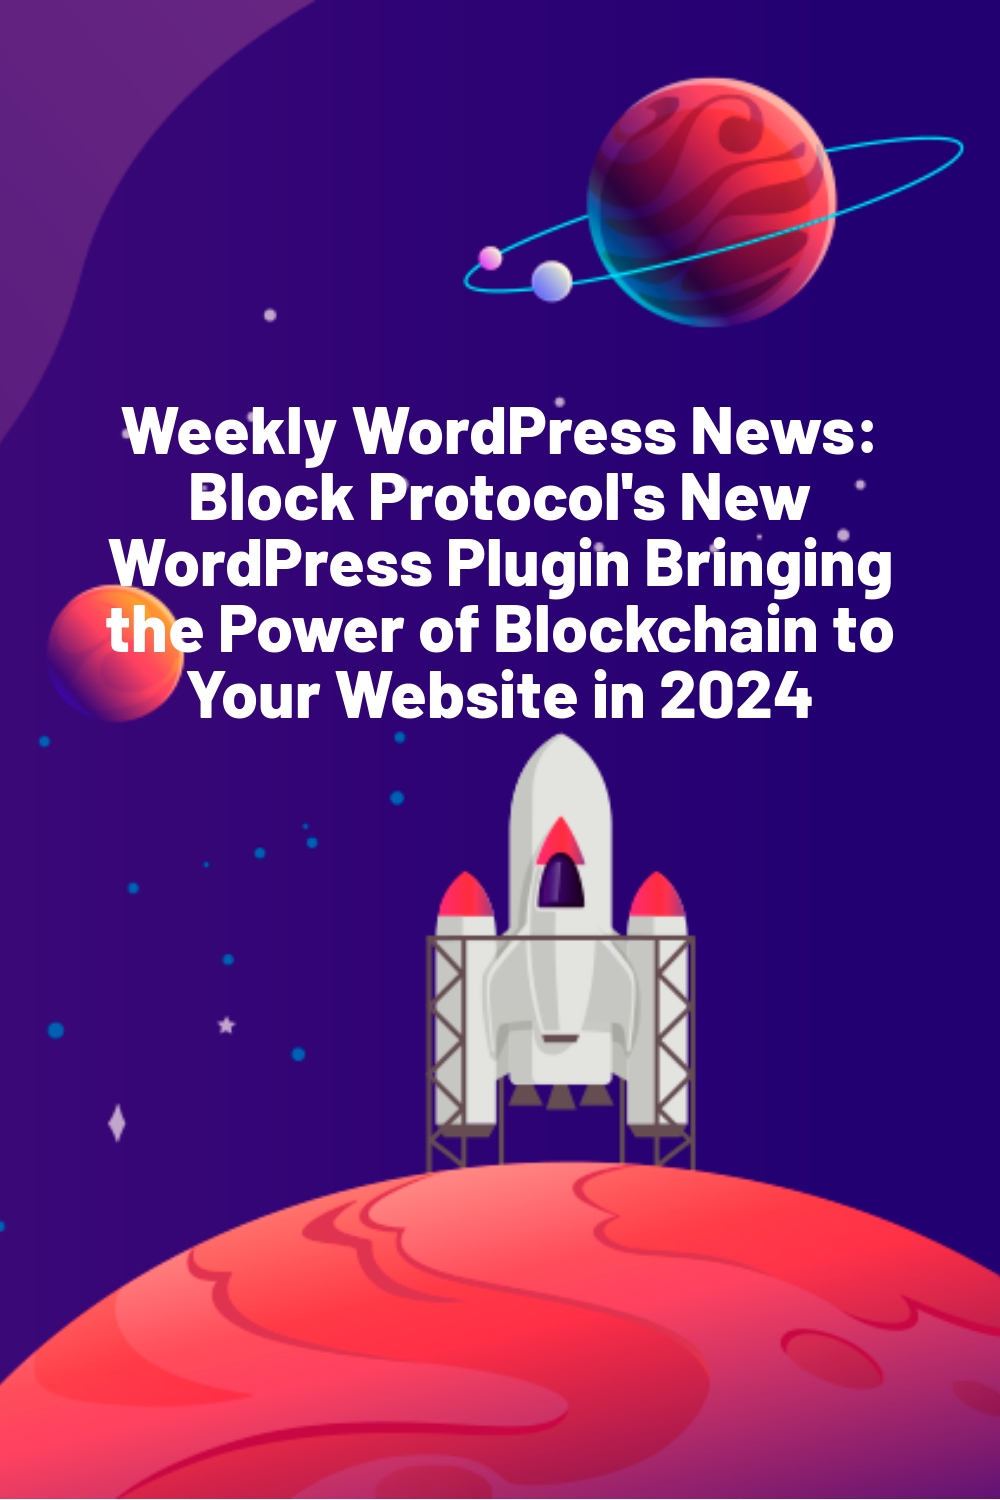 Weekly WordPress News: Block Protocol’s New WordPress Plugin Bringing the Power of Blockchain to Your Website in 2024